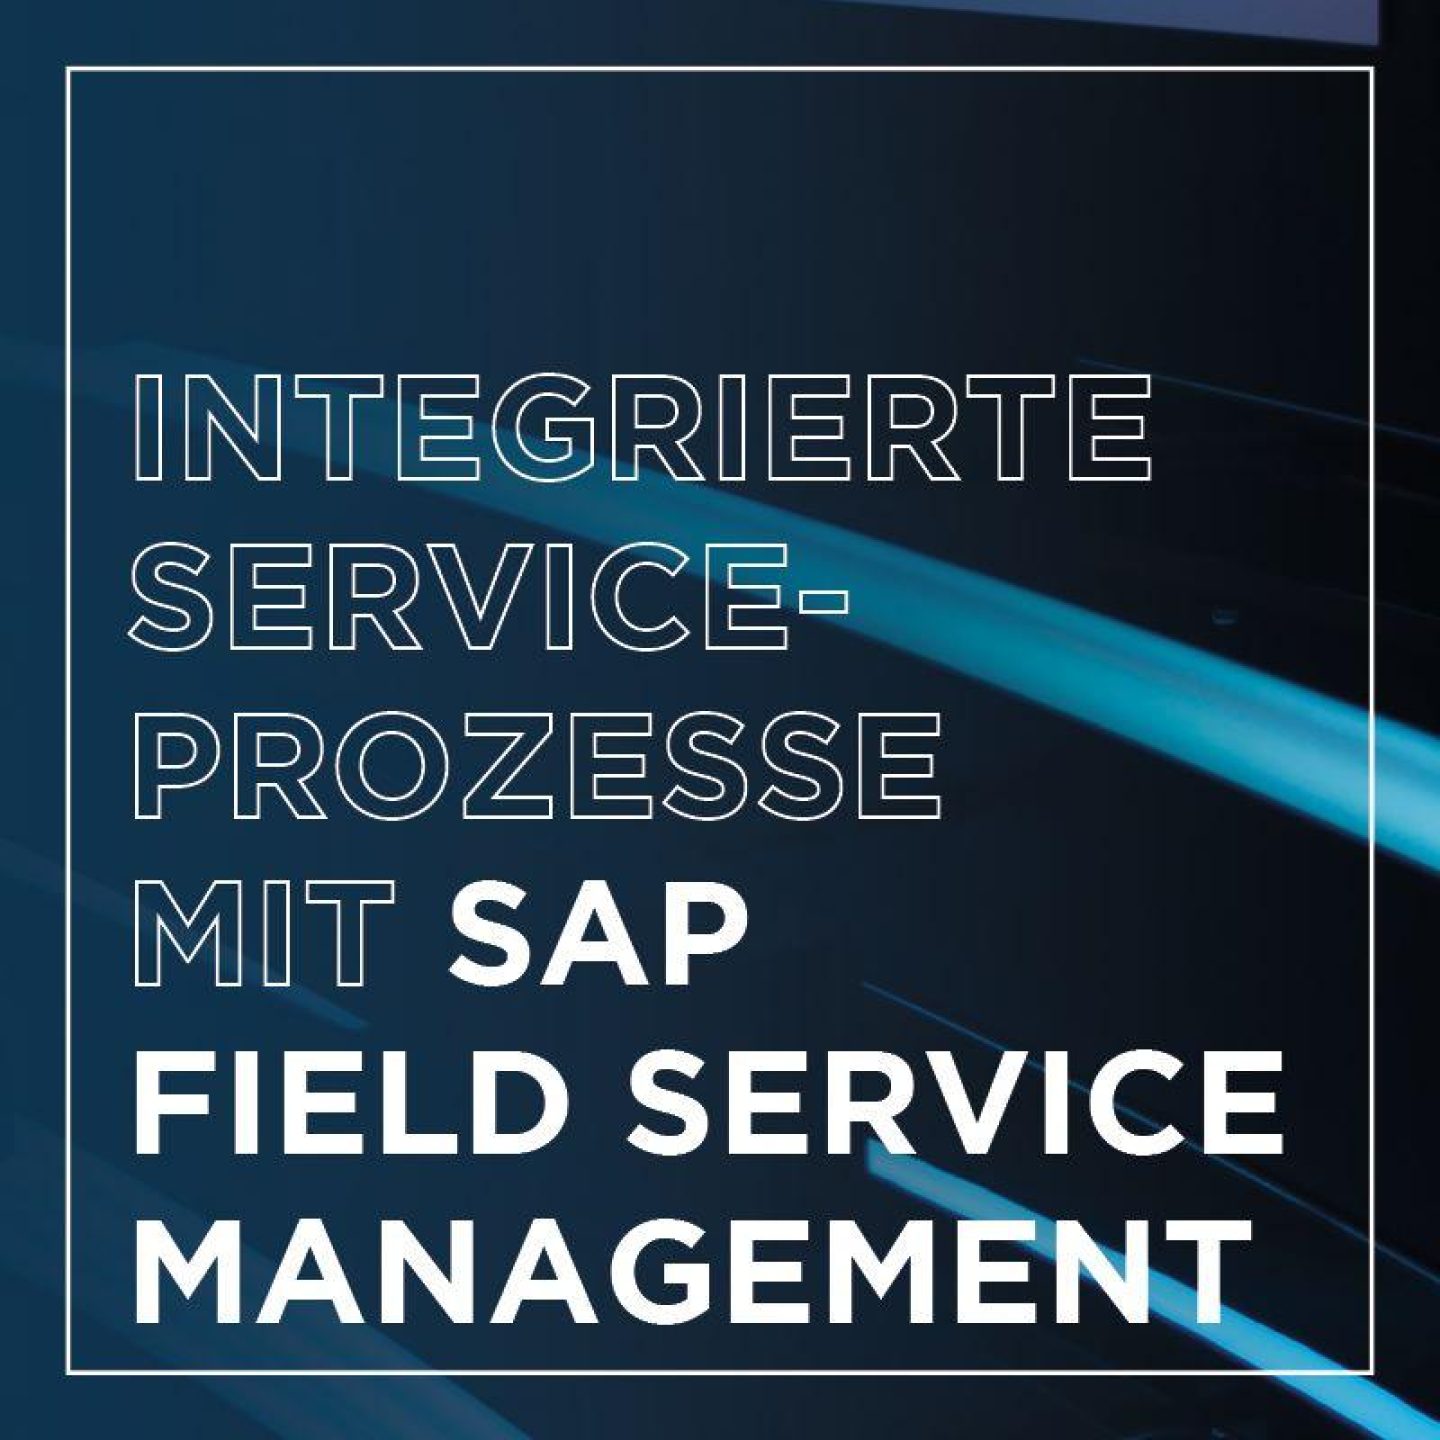 Gambit 800x800px kacheln innovation edition integrierte serviceprozesse mit sap field service management